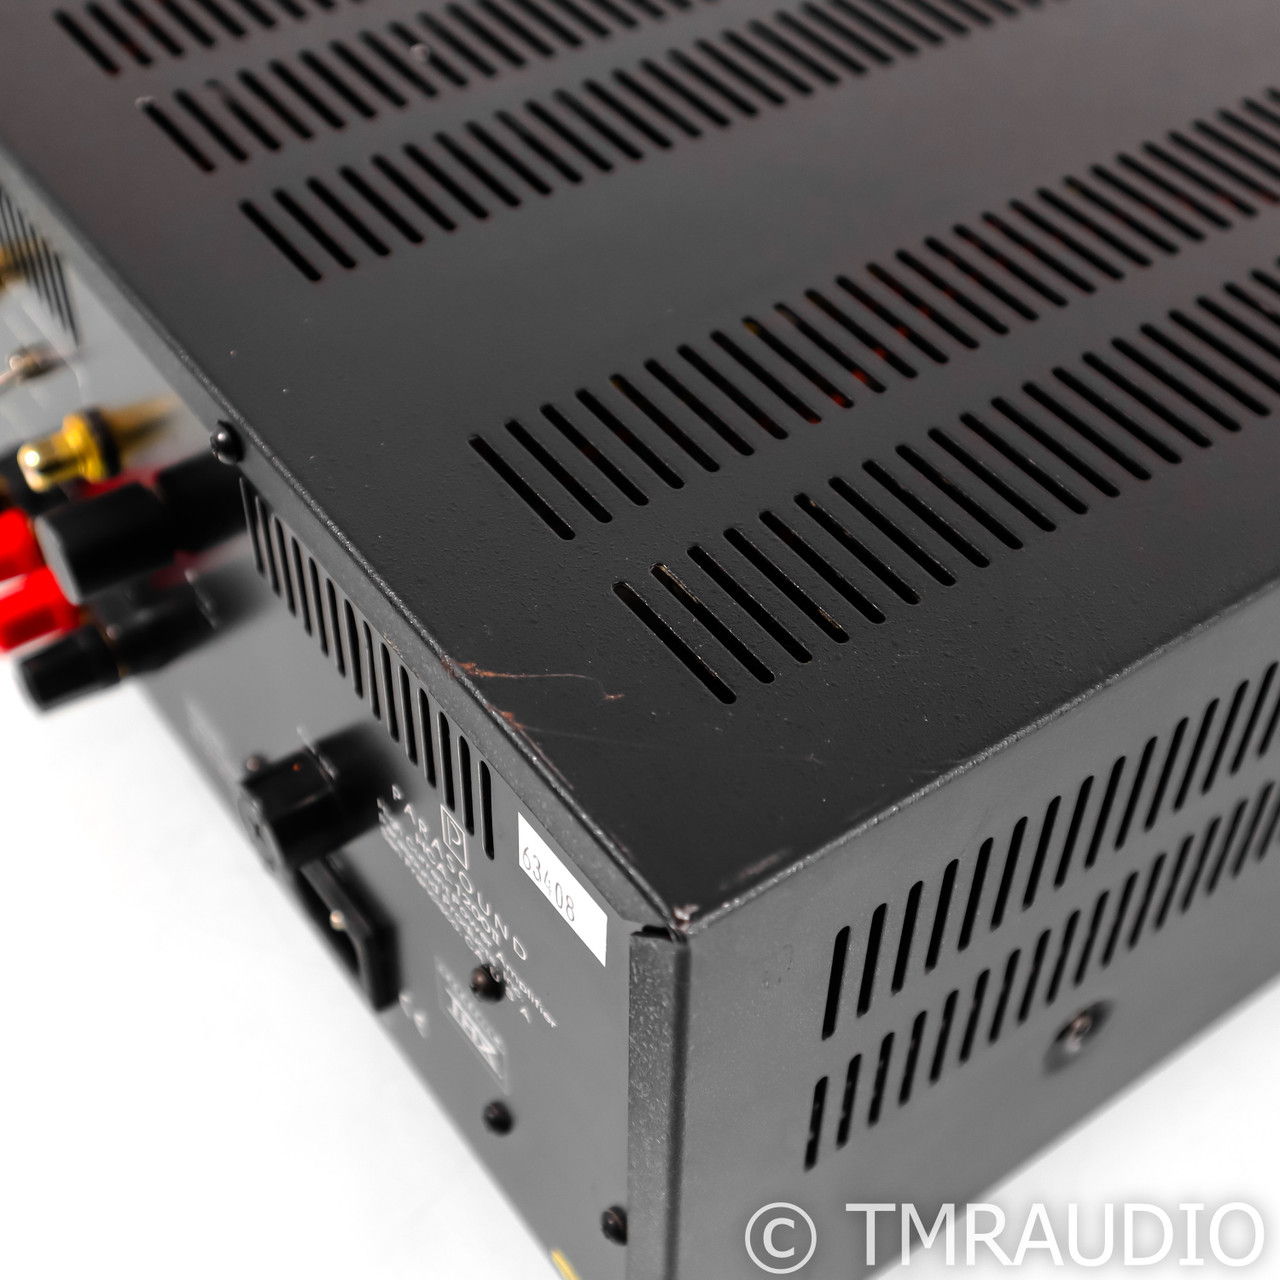 Parasound HCA-1200 MKII Stereo Power Amplifier (63408) 12